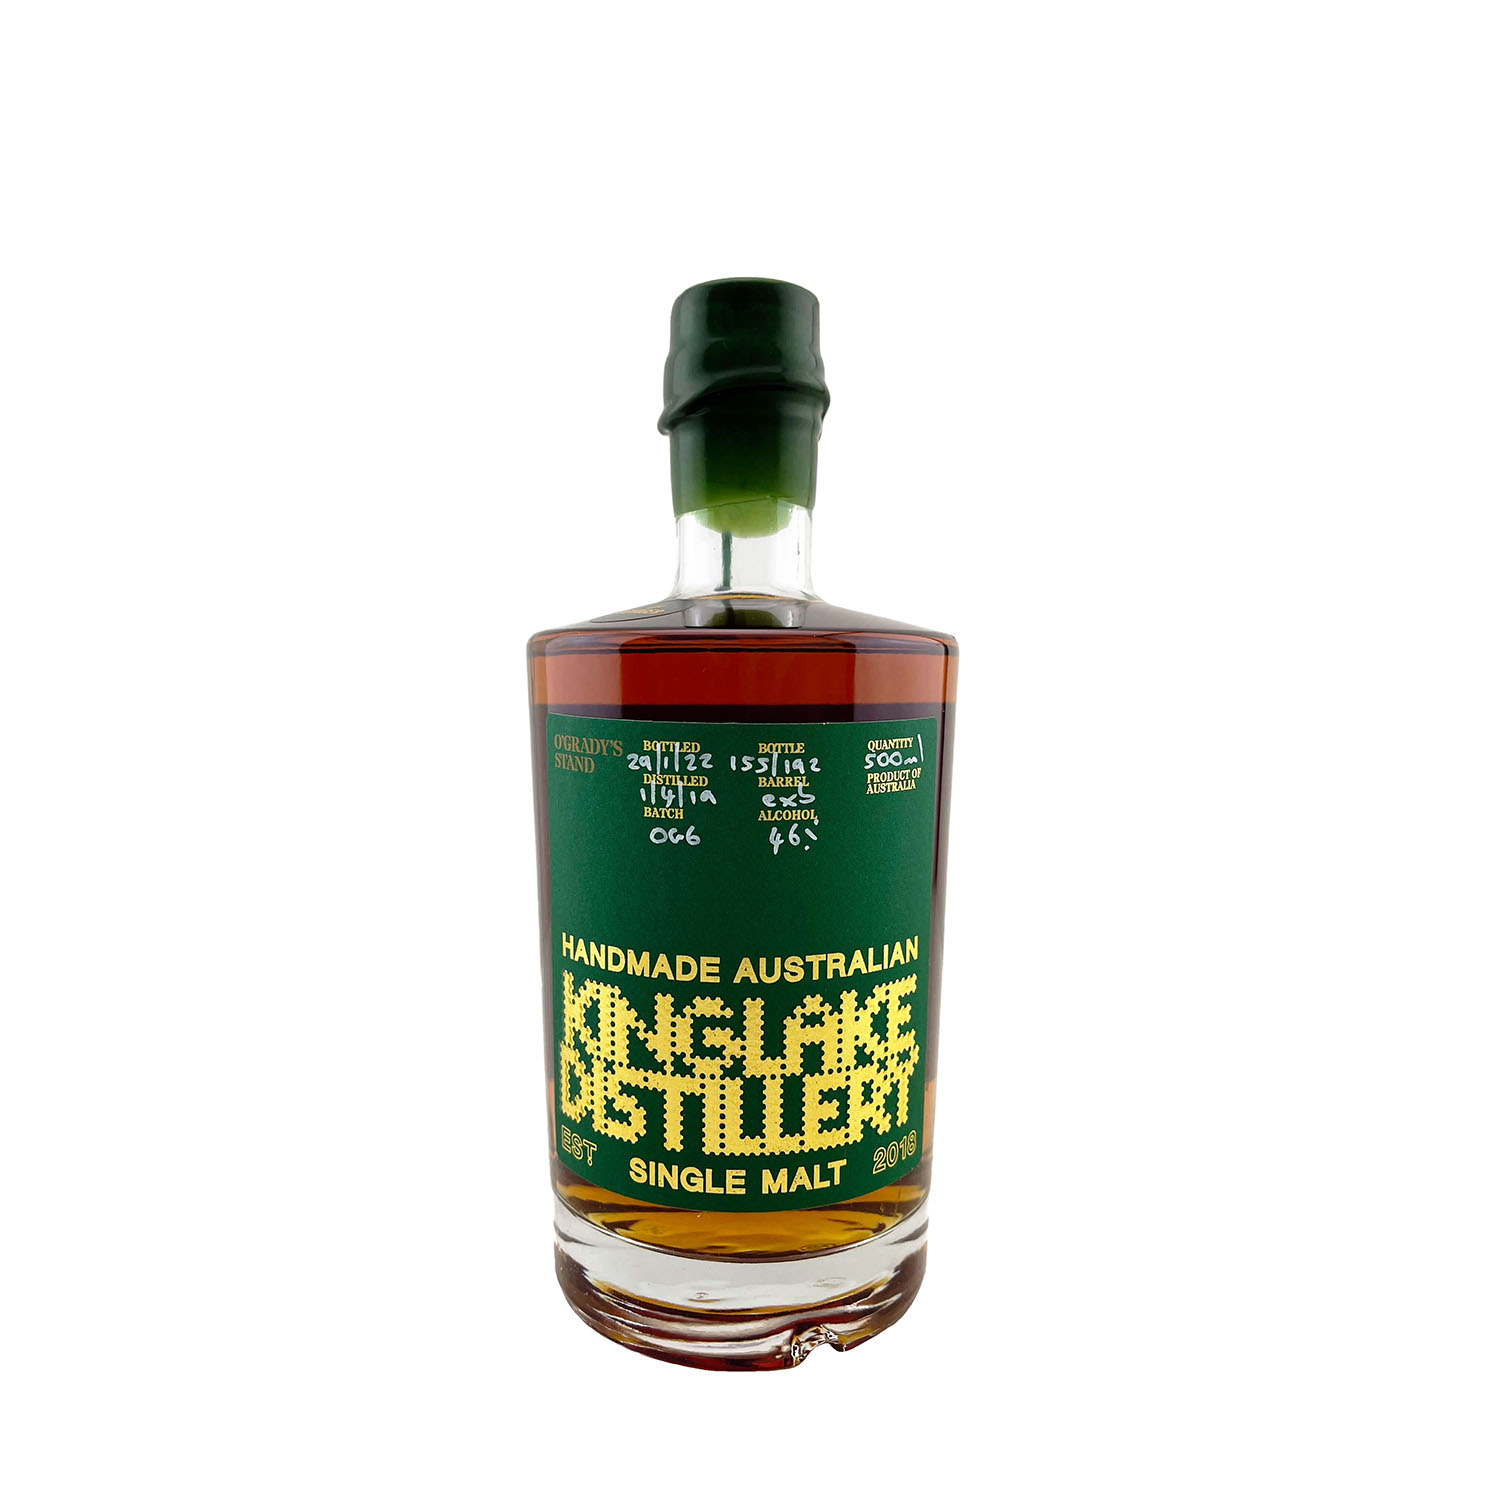 Kinglake O’Grady’s Stand Batch OG6, Australian Whisky, The Old Barrelhouse